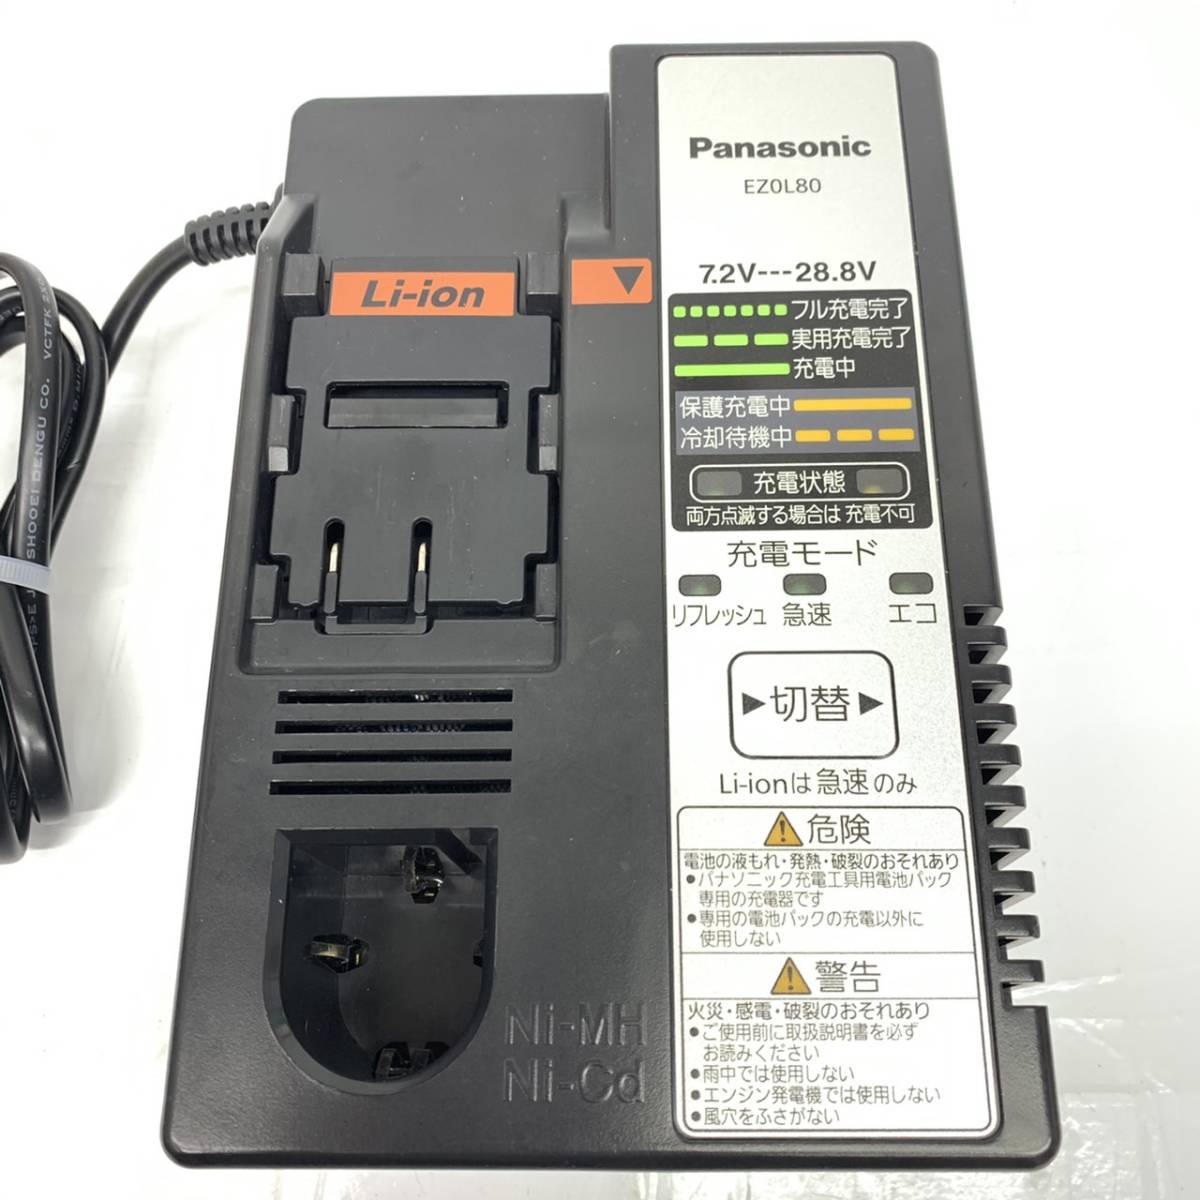  free shipping h57230 Panasonic Panasonic fast charger EZ0L80 7.2V-28.8V power tool carpenter's tool tool DIY